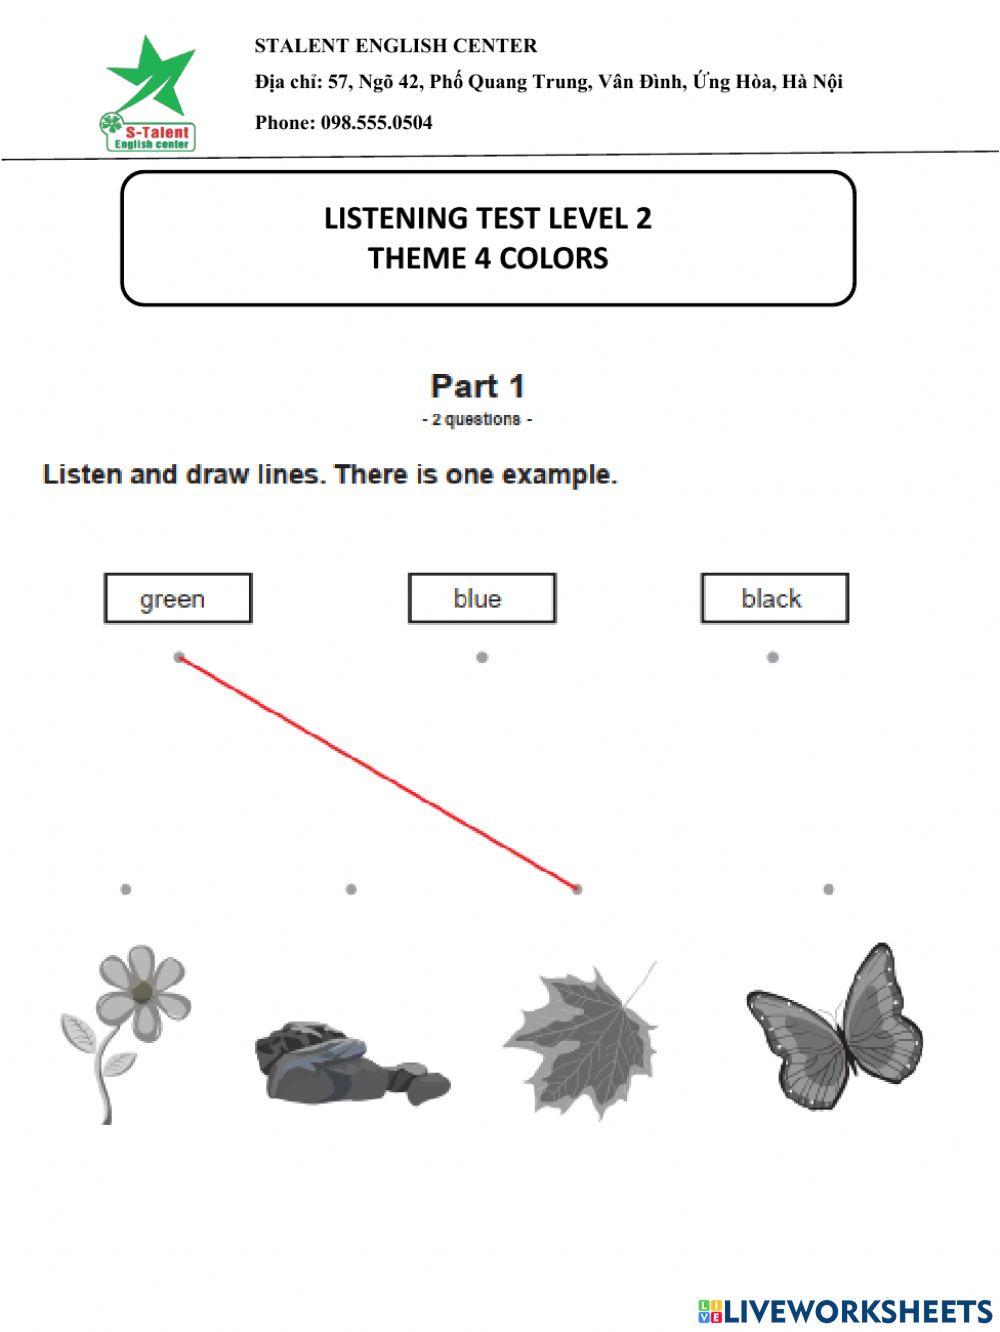 Listening test level 2 theme 4